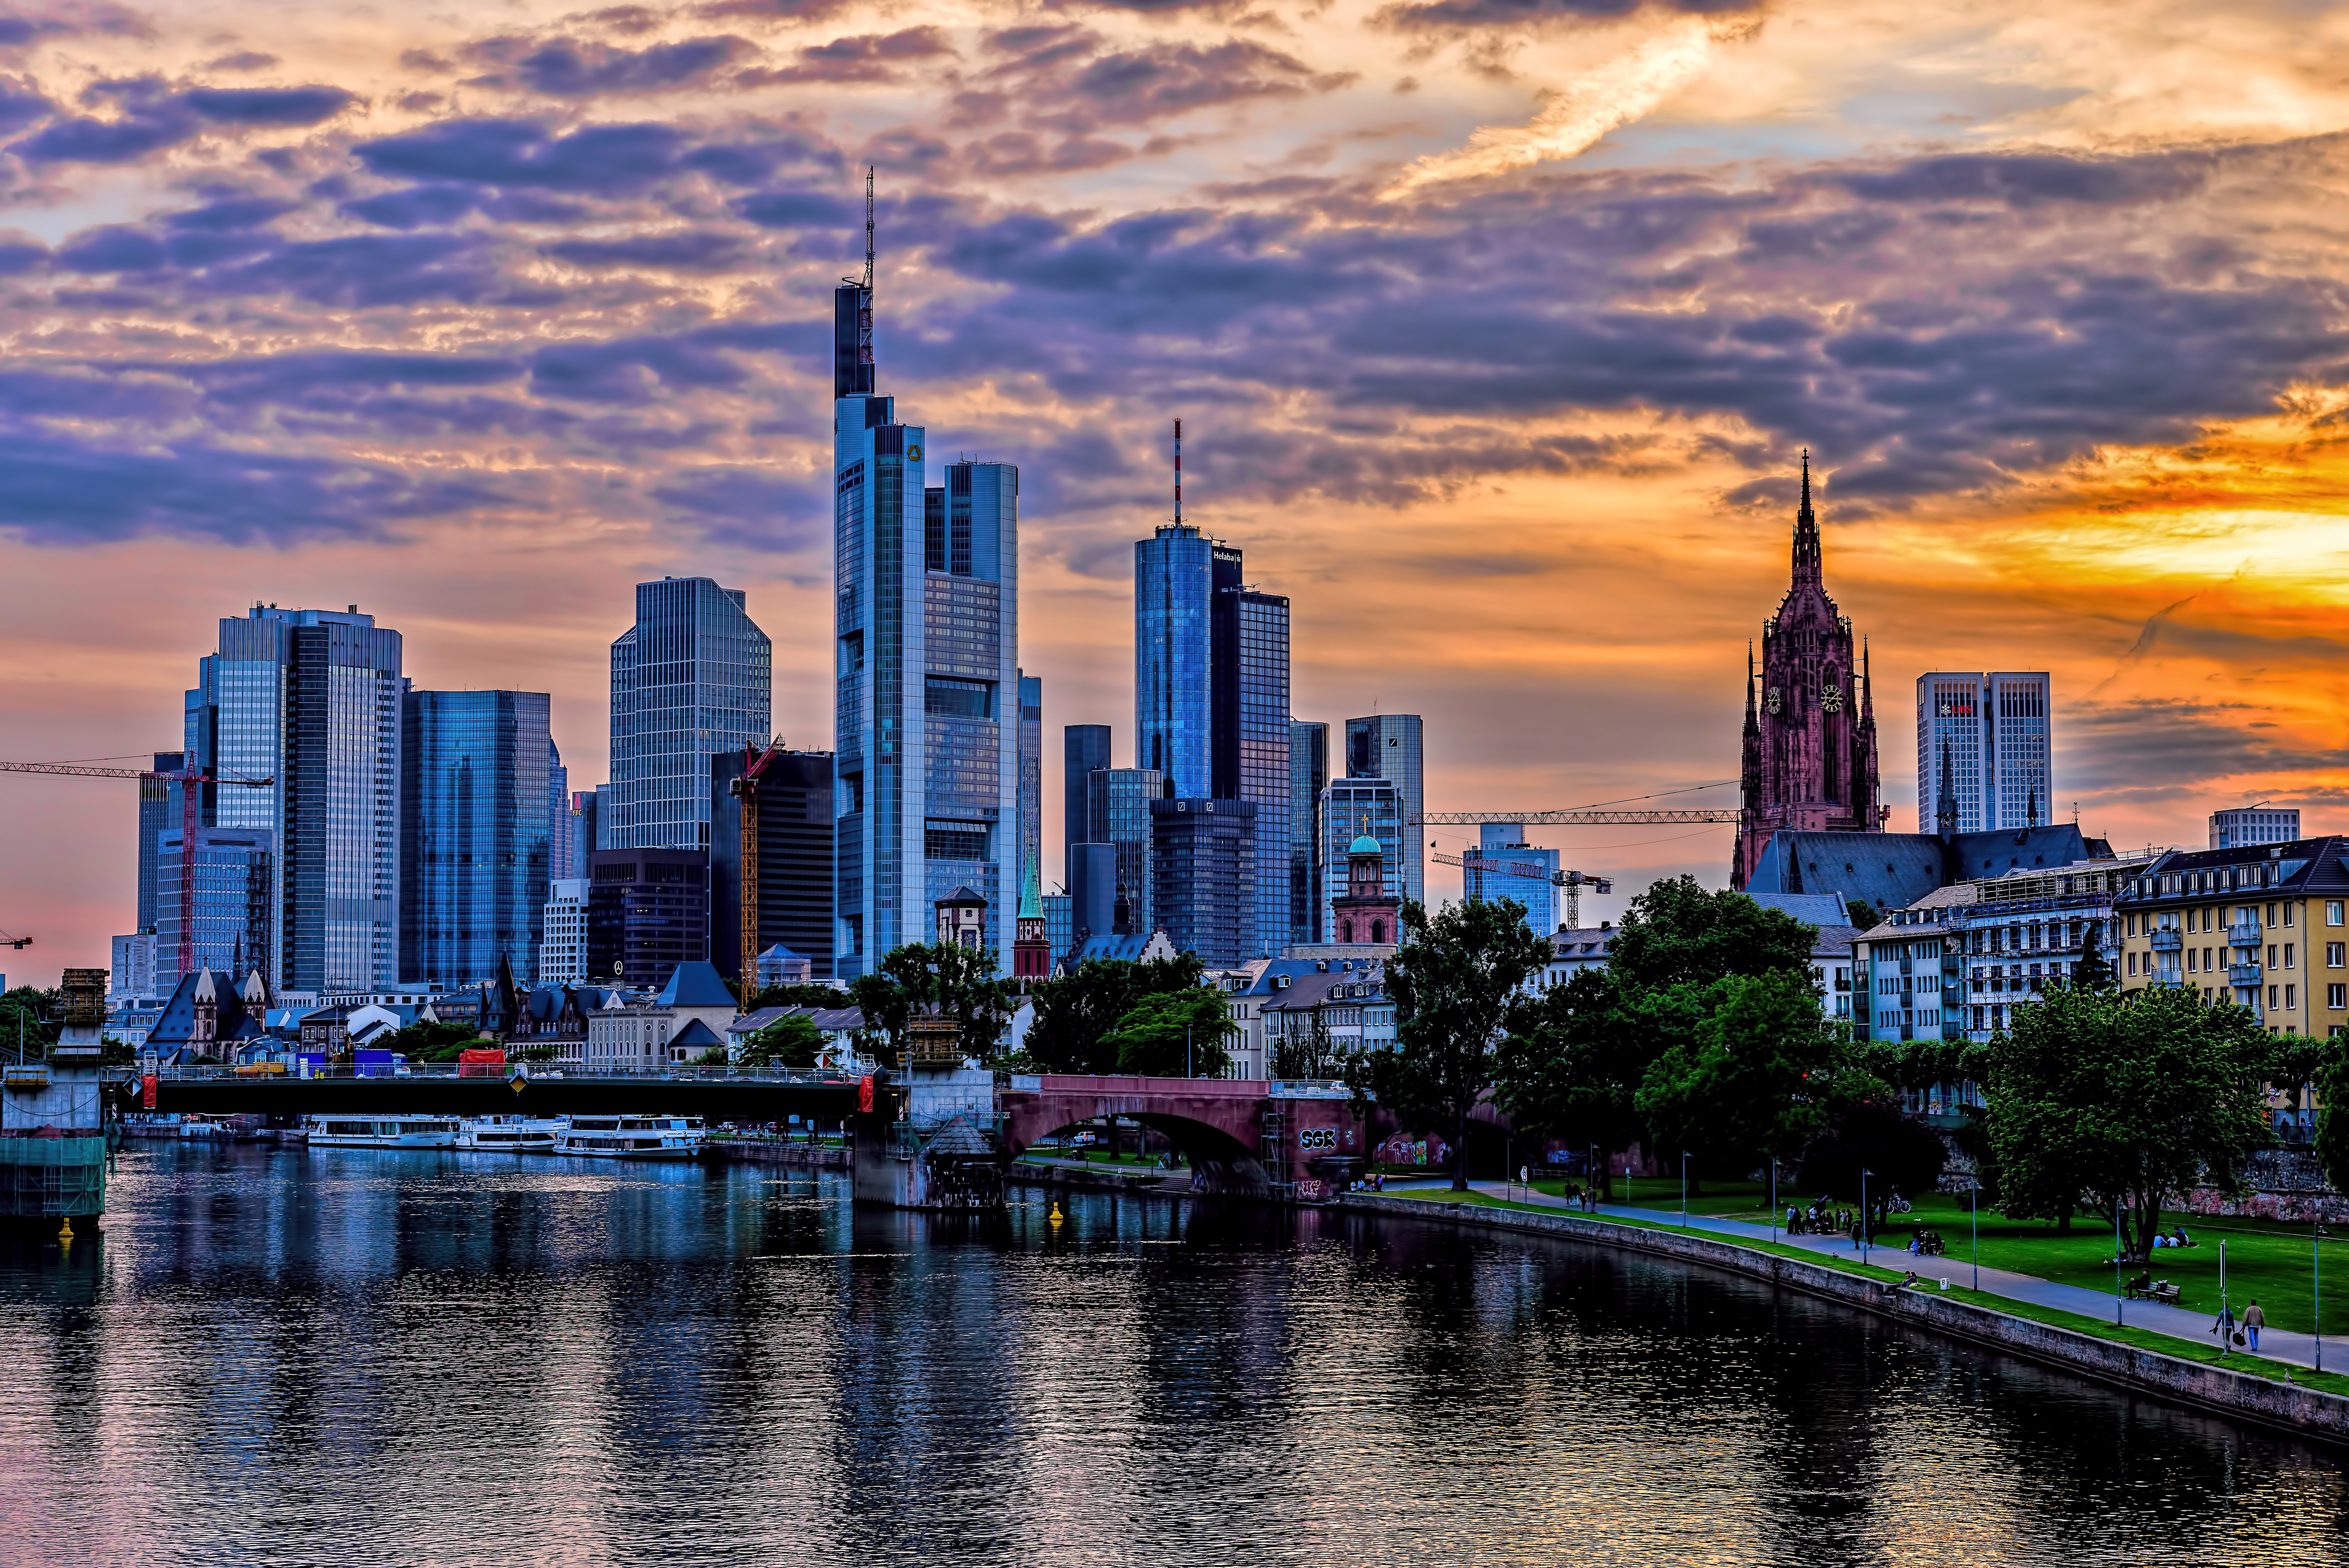 Main night. Франкфурт-на-Майне небоскребы. Город Франкфурт на Майне Германия. Франкфурт небоскребы. Высотки Франкфурта на Майне.